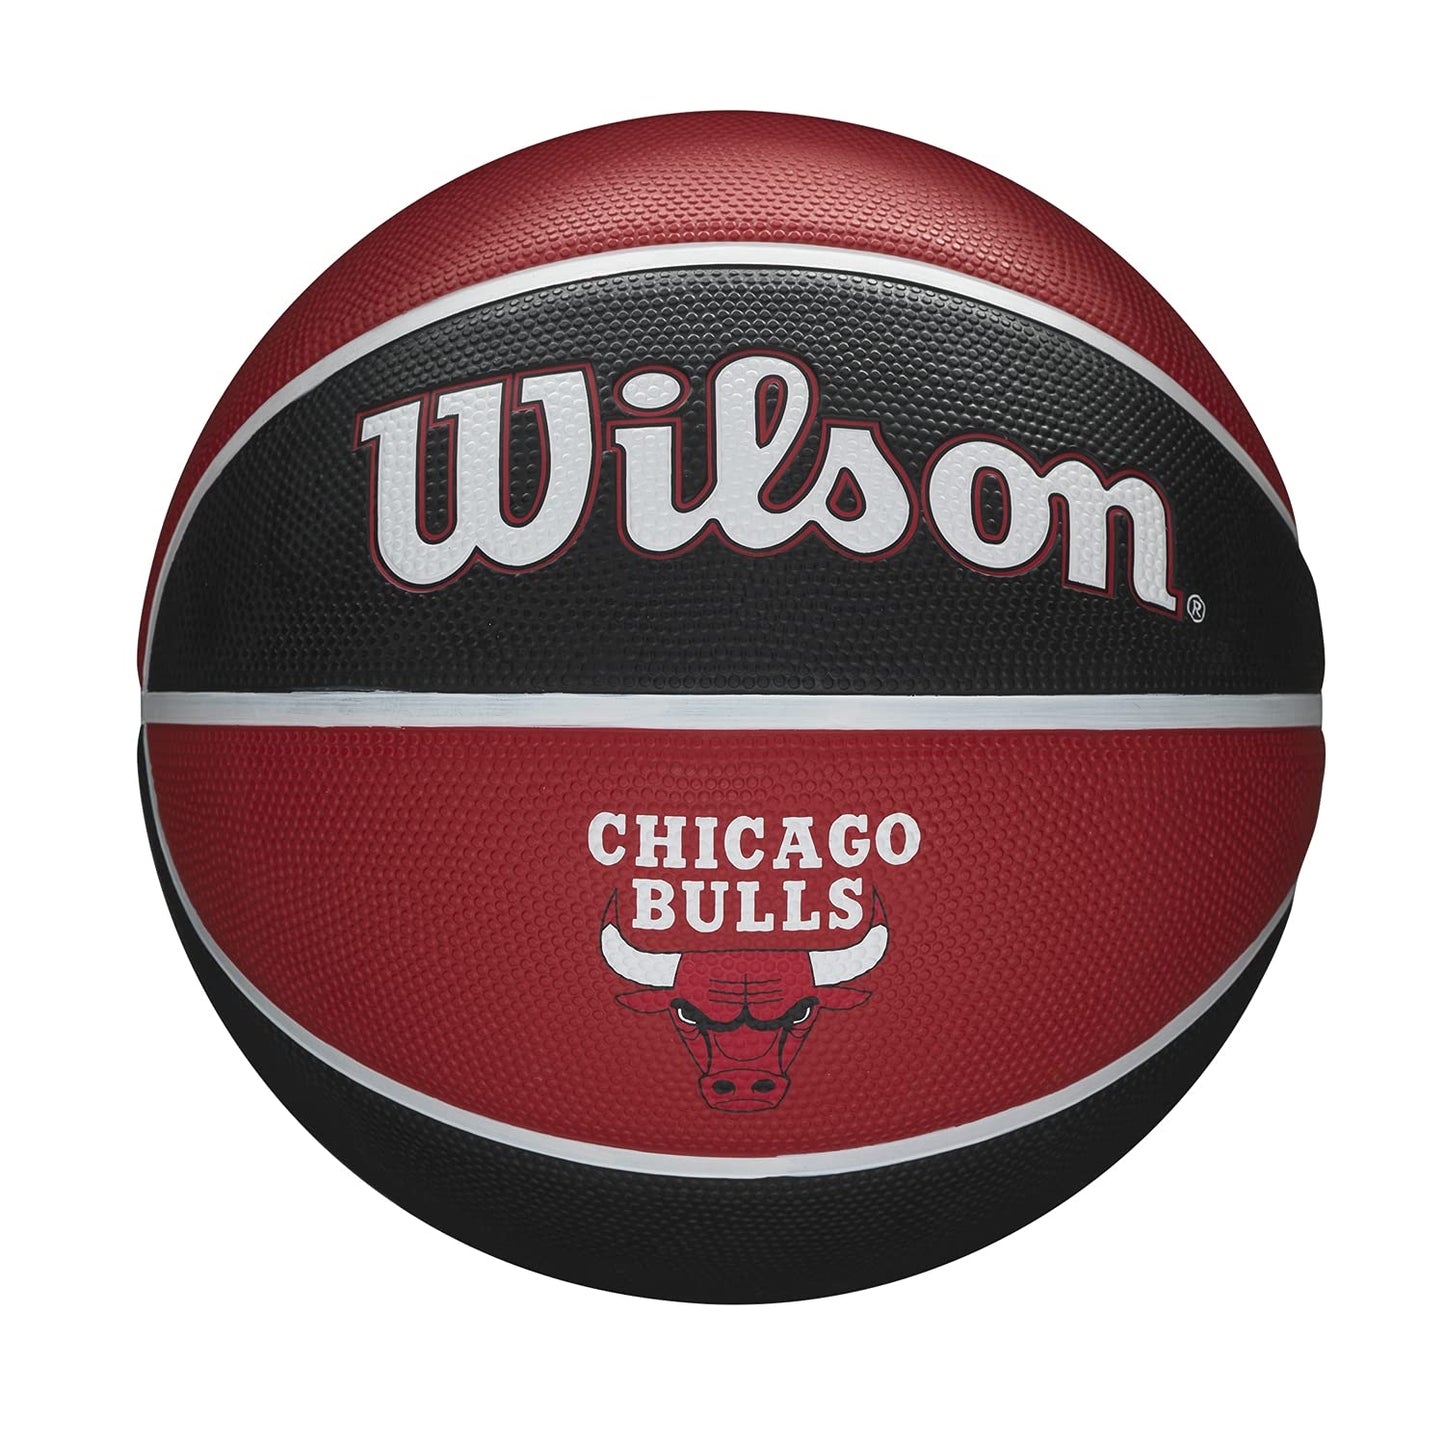 Wilson NBA Team Tribute Chicago Bulls Basketball, Size 7 (Red/Black) - Best Price online Prokicksports.com